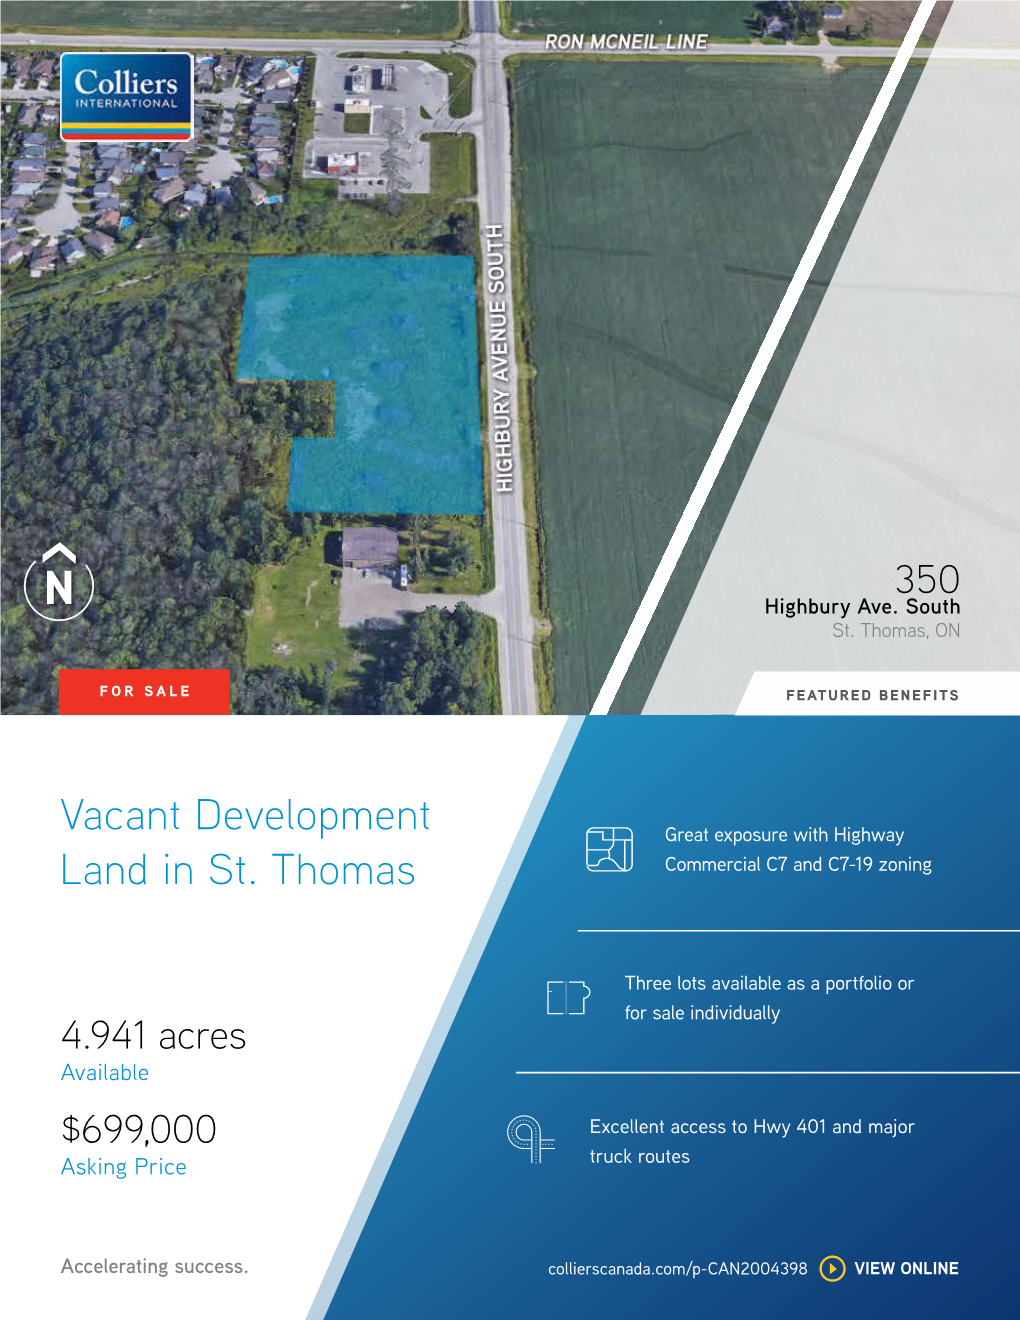 Vacant Development Land in St. Thomas